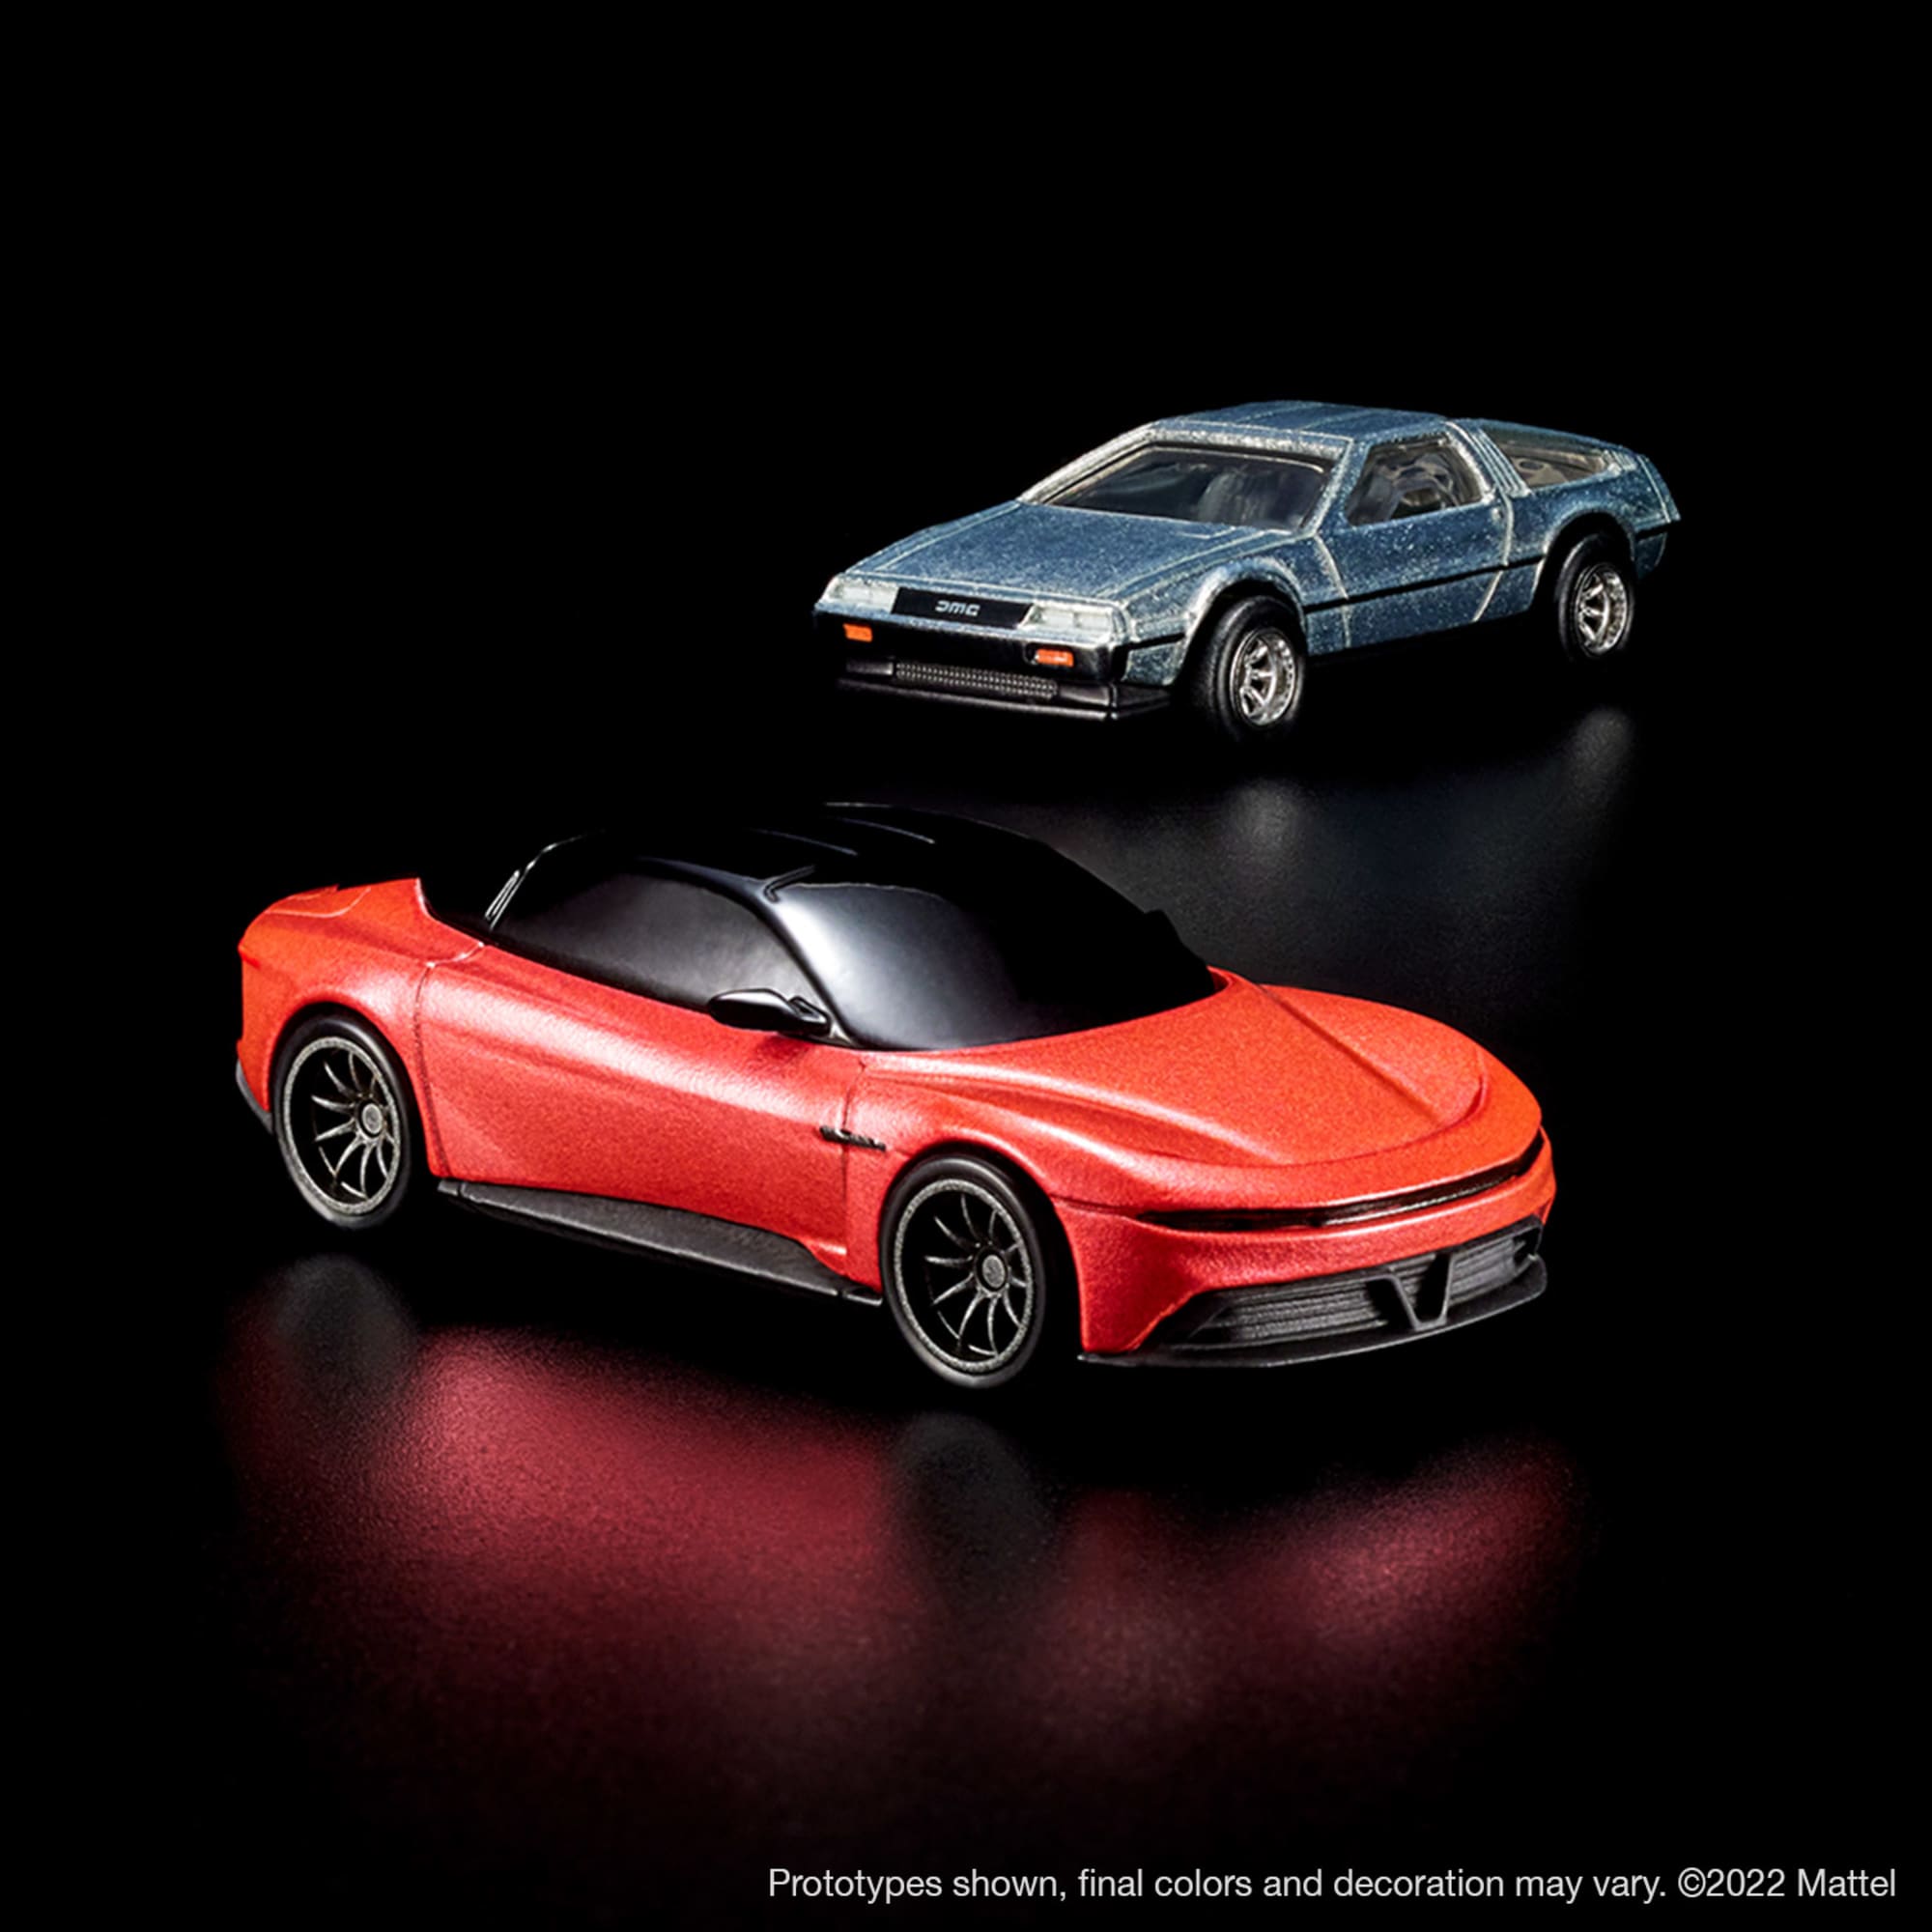 Hot Wheels x DeLorean | DMC-12 & Alpha5 Collector Set